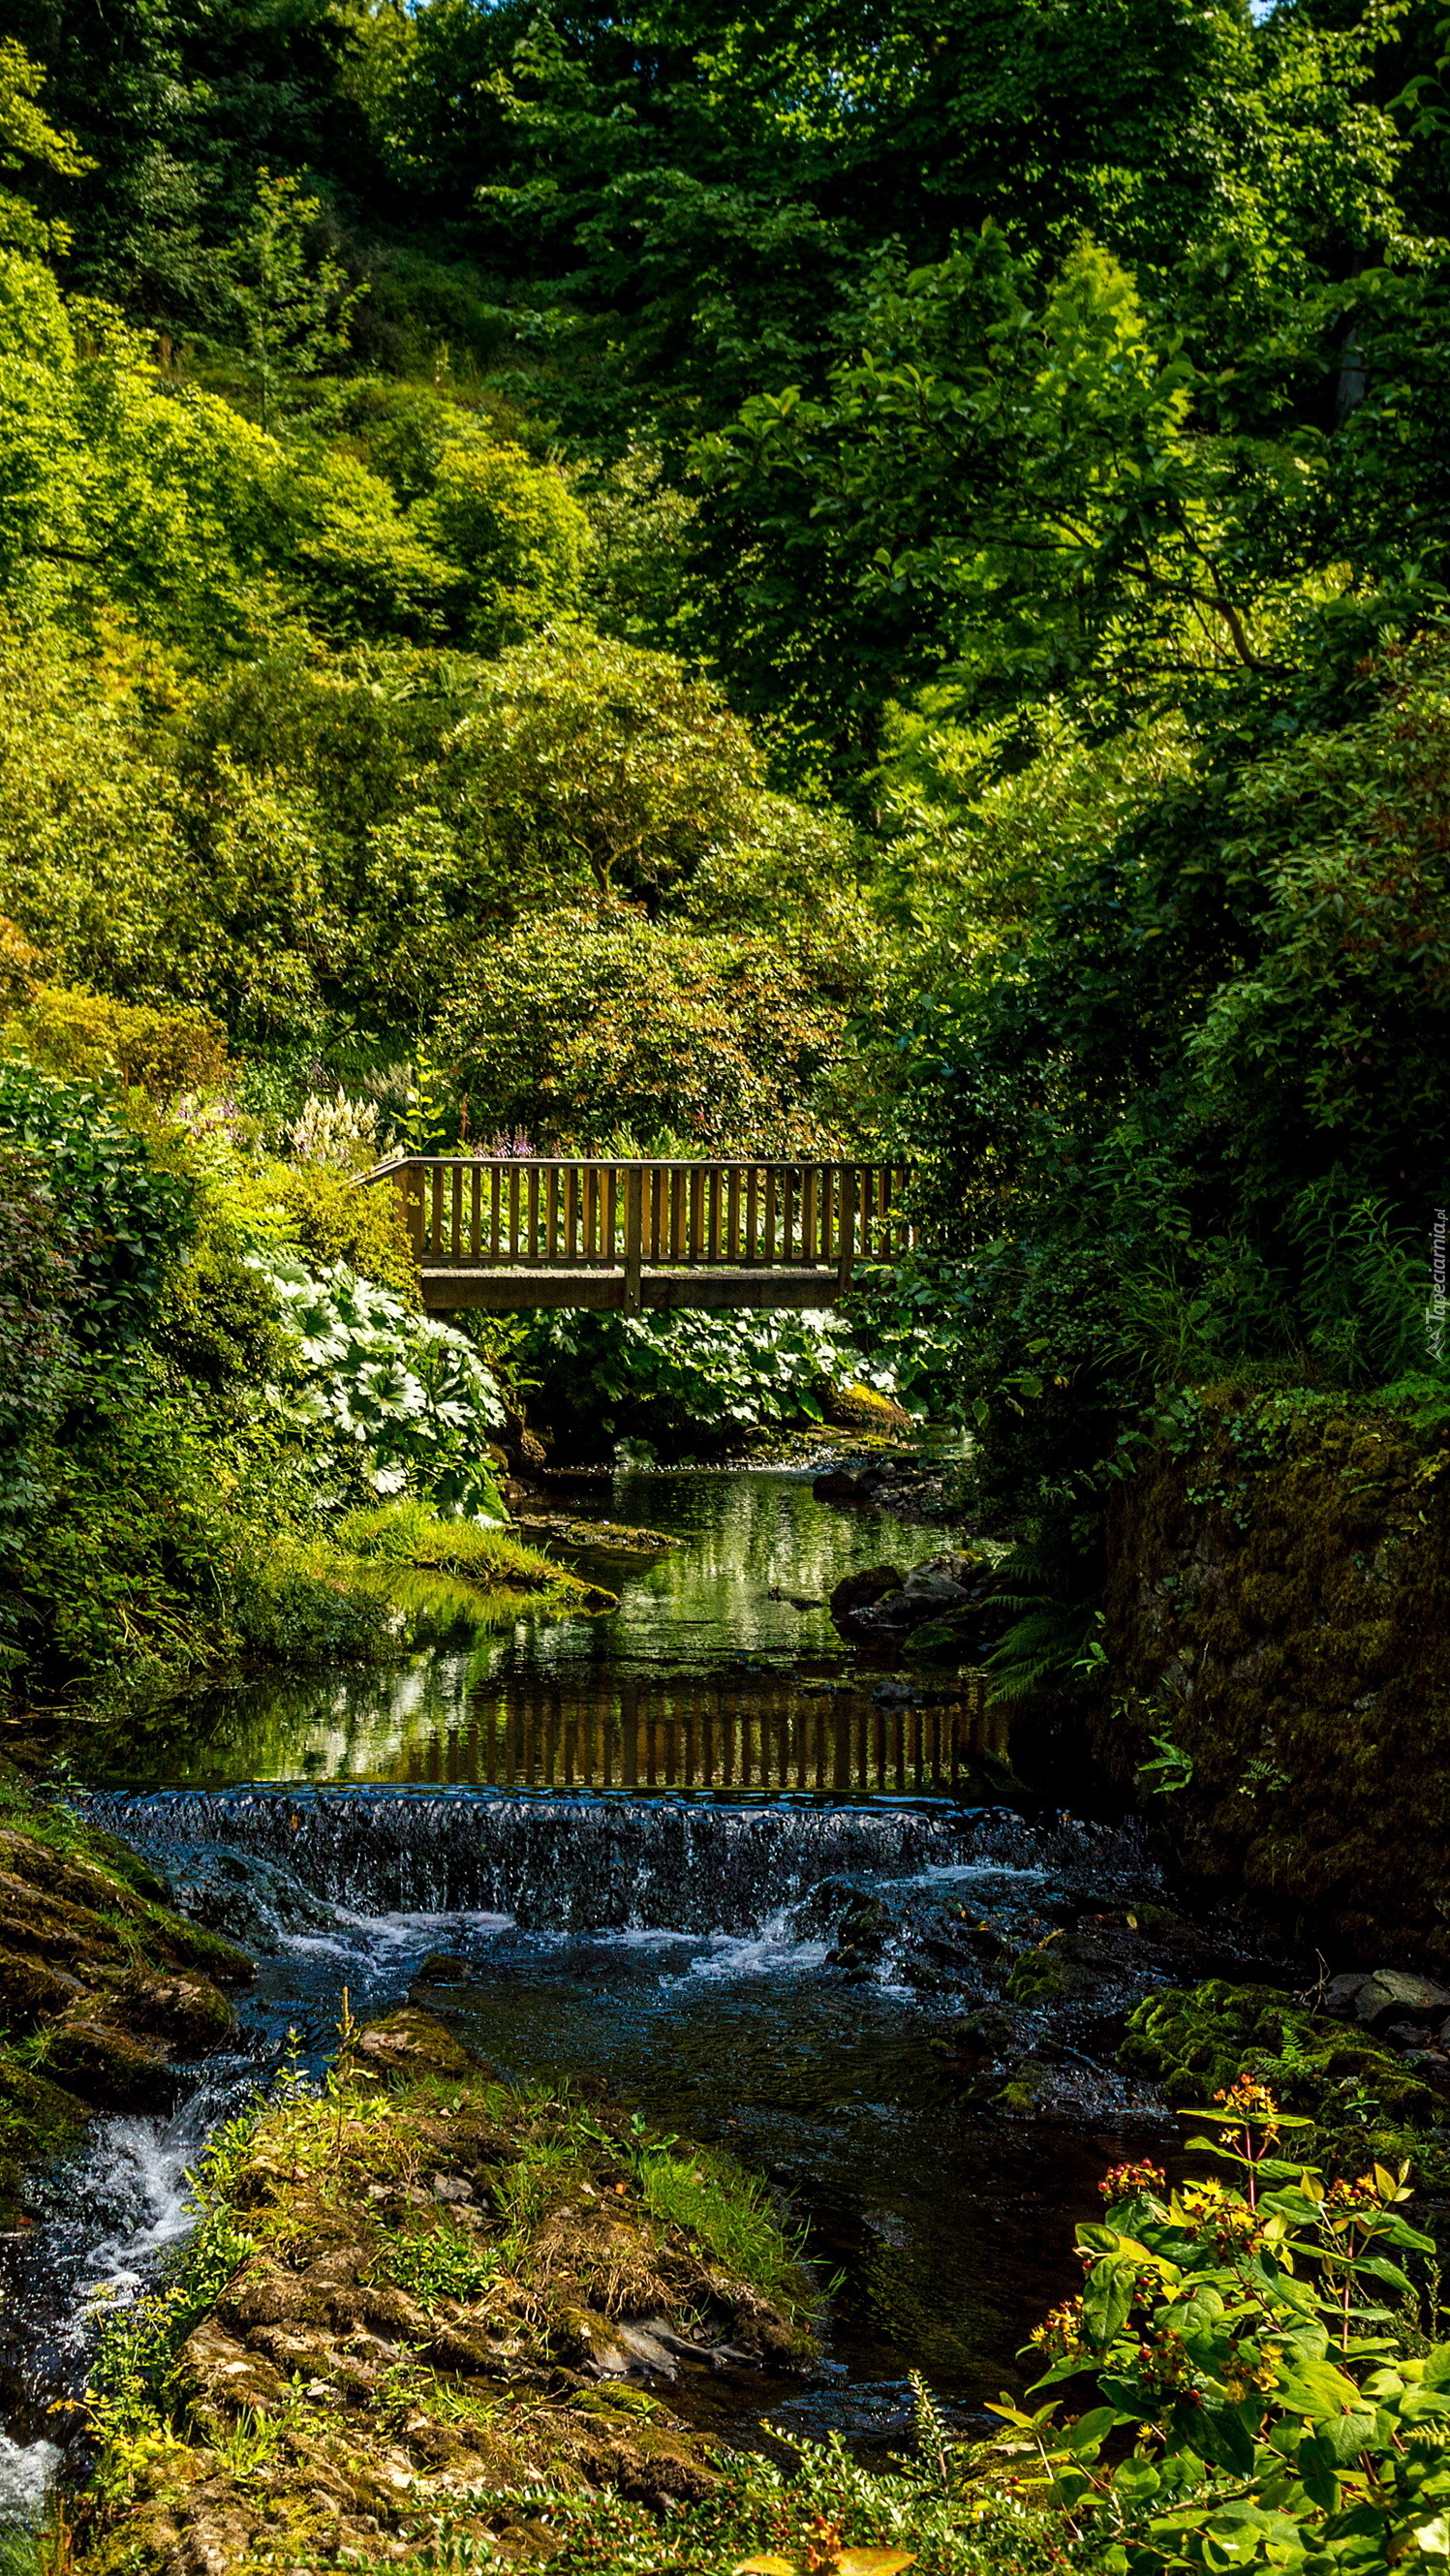 Mostek na rzece wśród zieleni